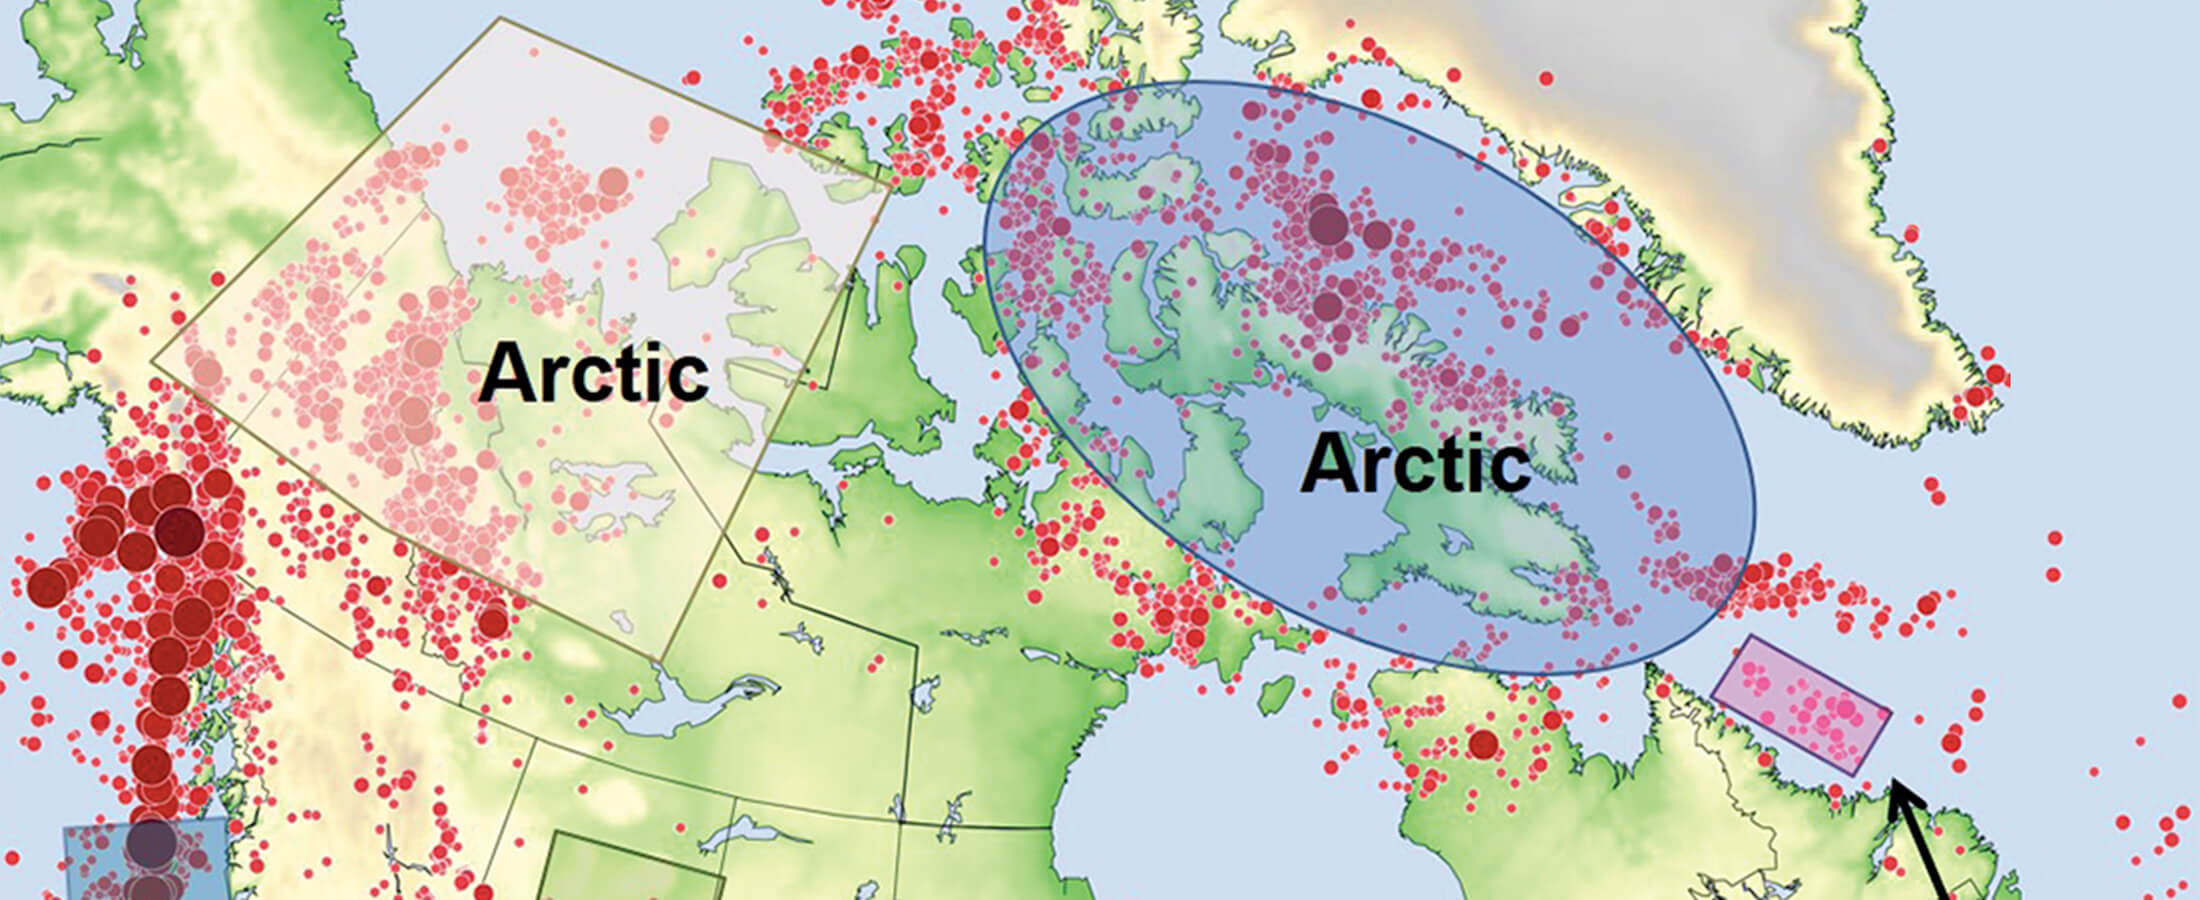 Abstract: Ocean Bottom Seismometer Instrumentation in Canada